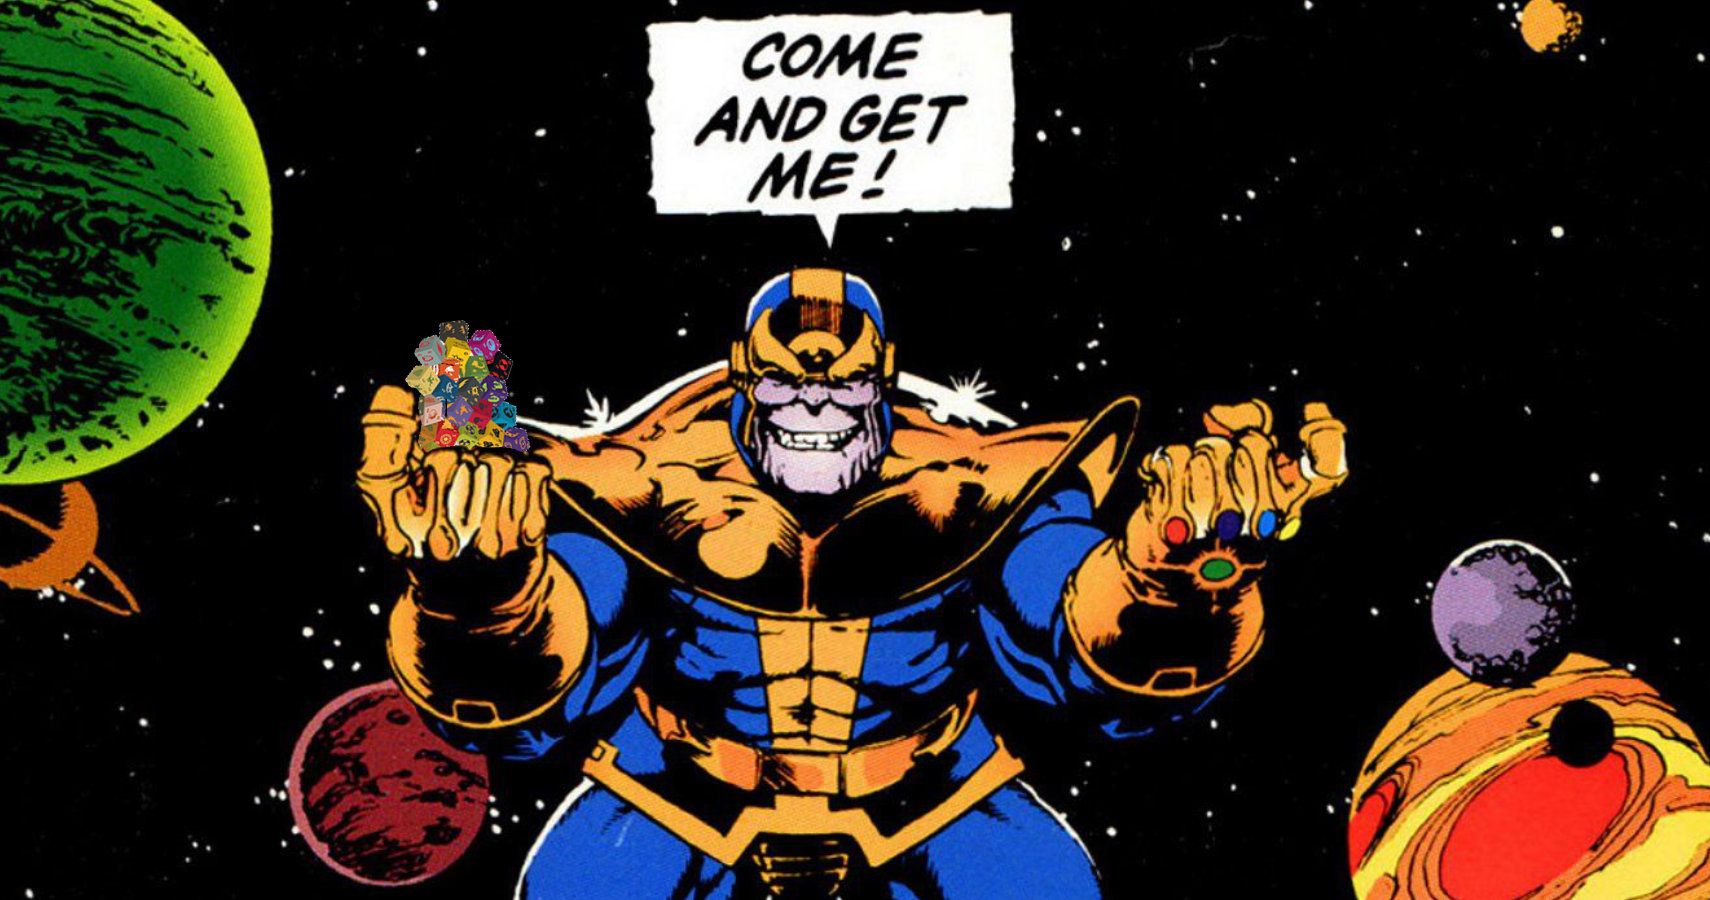 Dice Masters Proxima Midnight  #122 Rare w/ 1 Die  Avengers Infinity Gauntlet